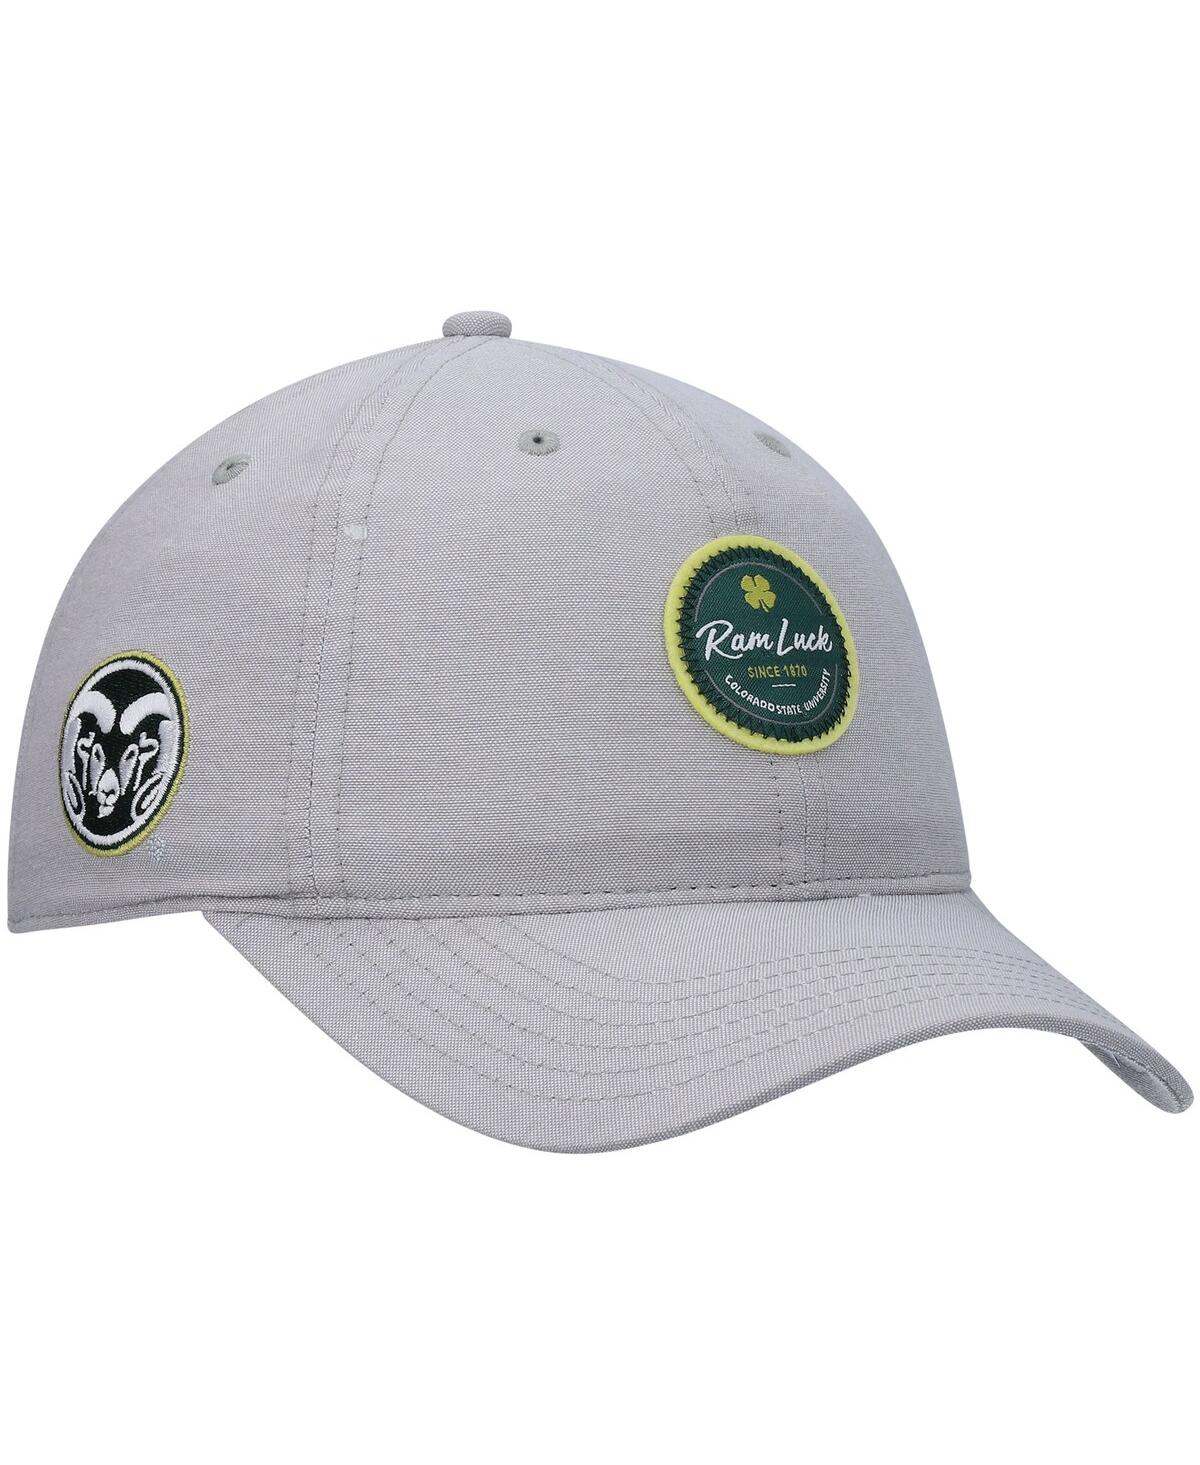 Shop Black Clover Men's Gray Colorado State Rams Oxford Circle Adjustable Hat